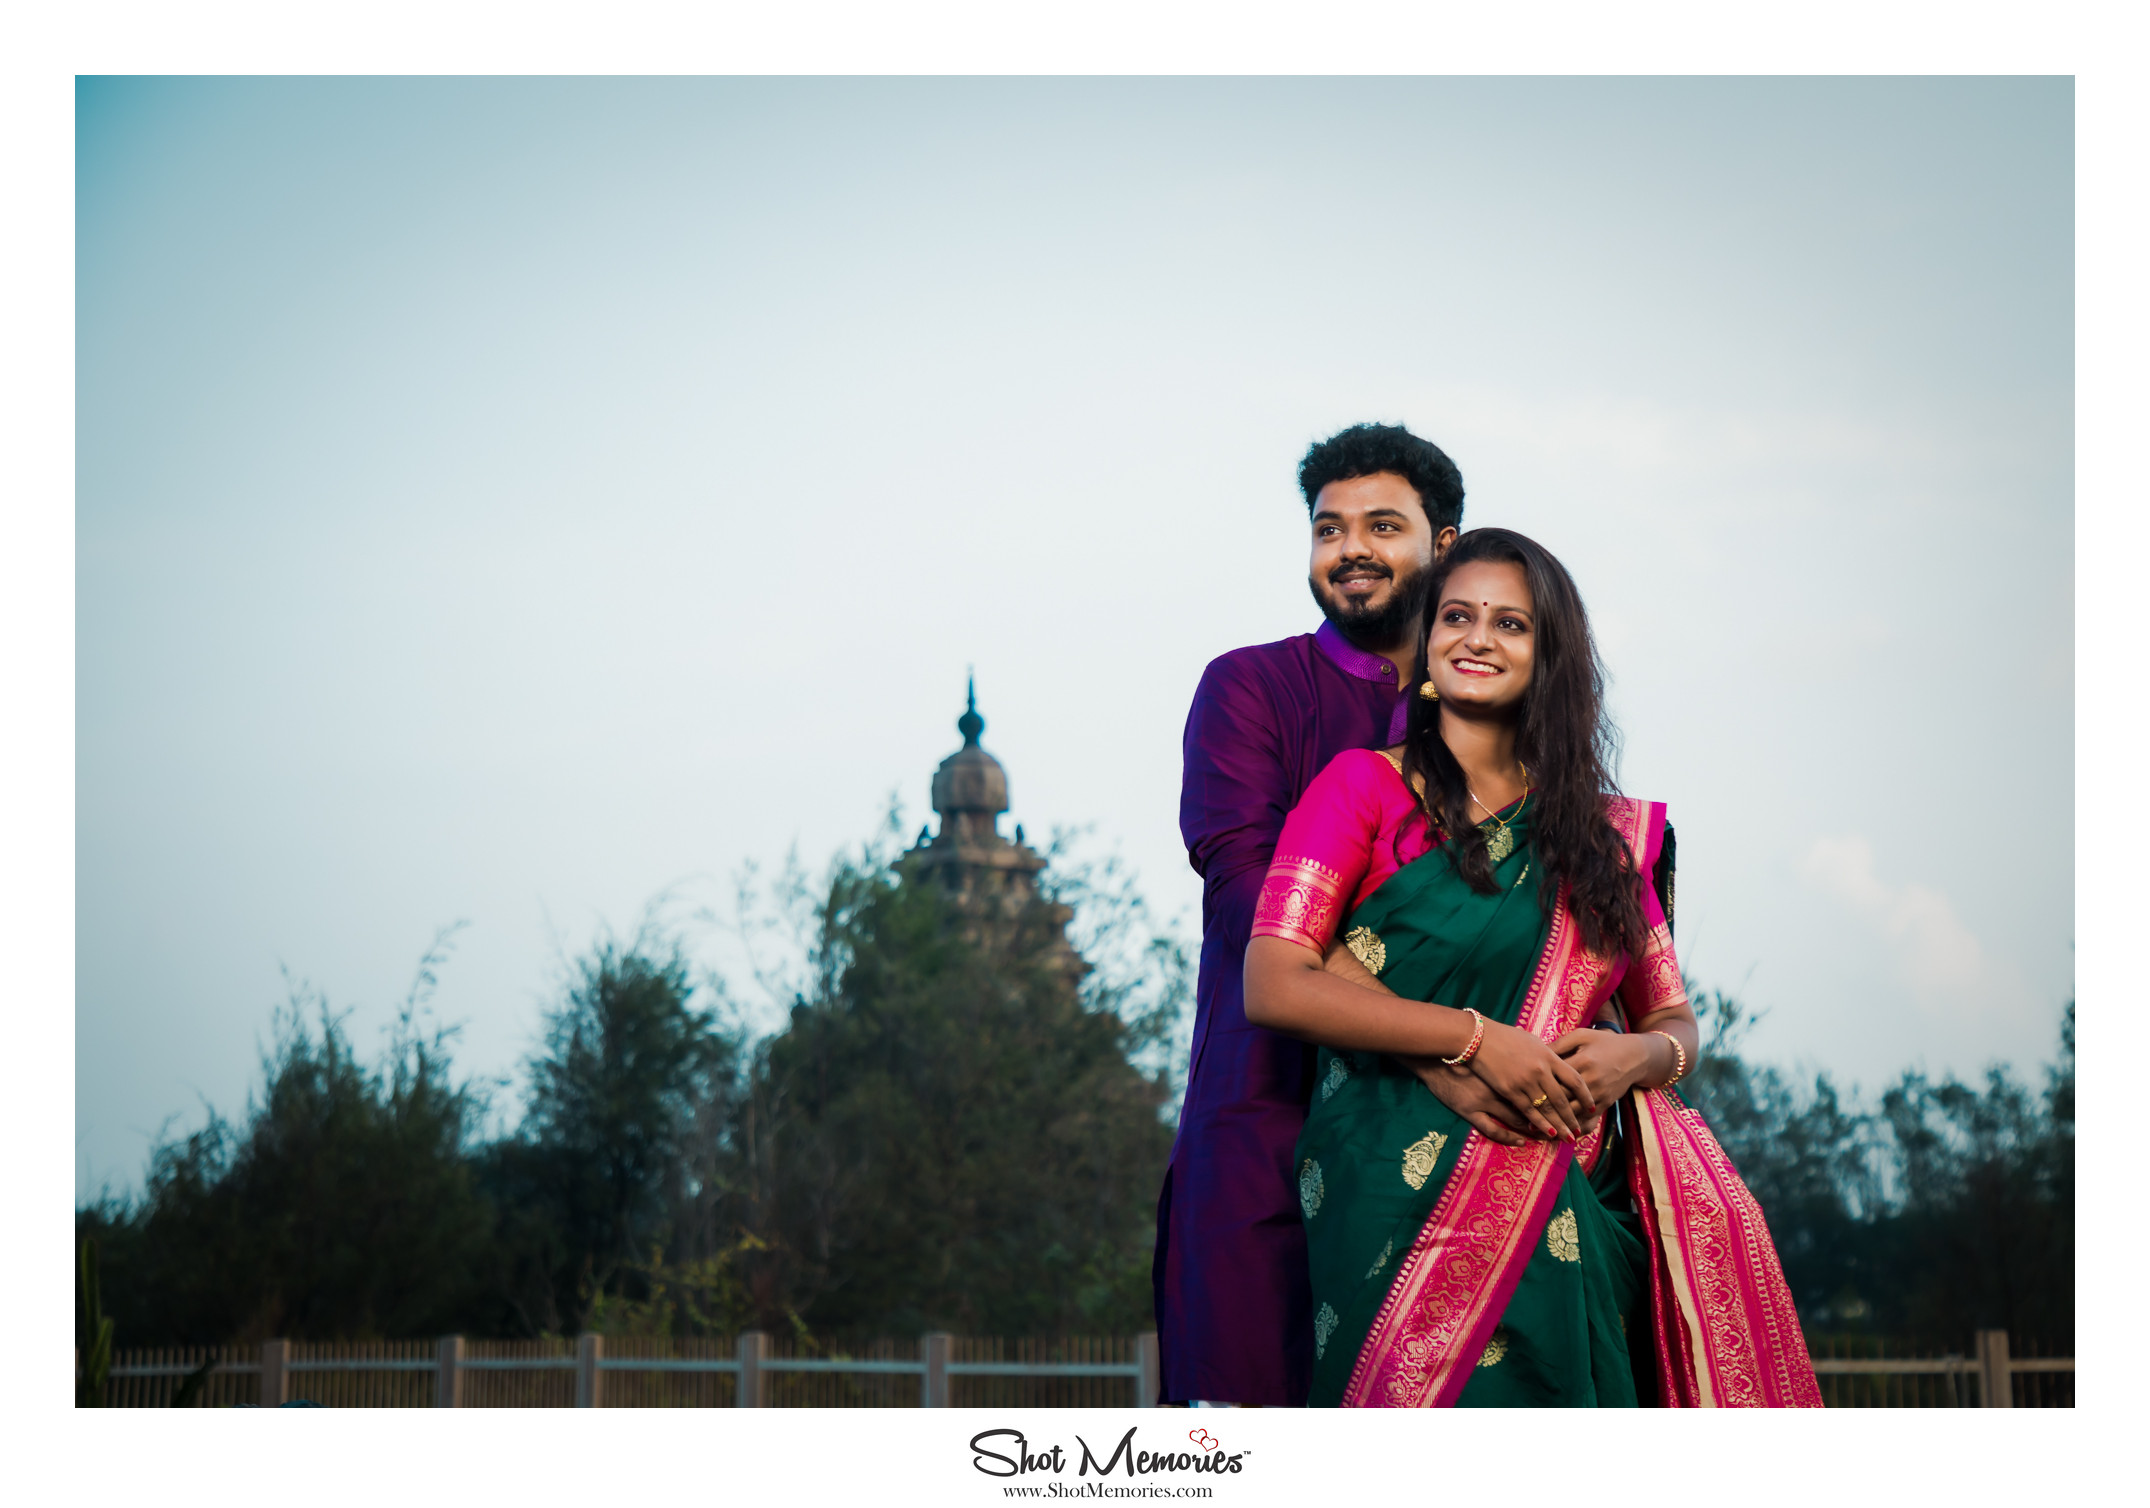 Nav jivan | Wedding couple poses photography, Indian wedding couple  photography, Couple photography poses